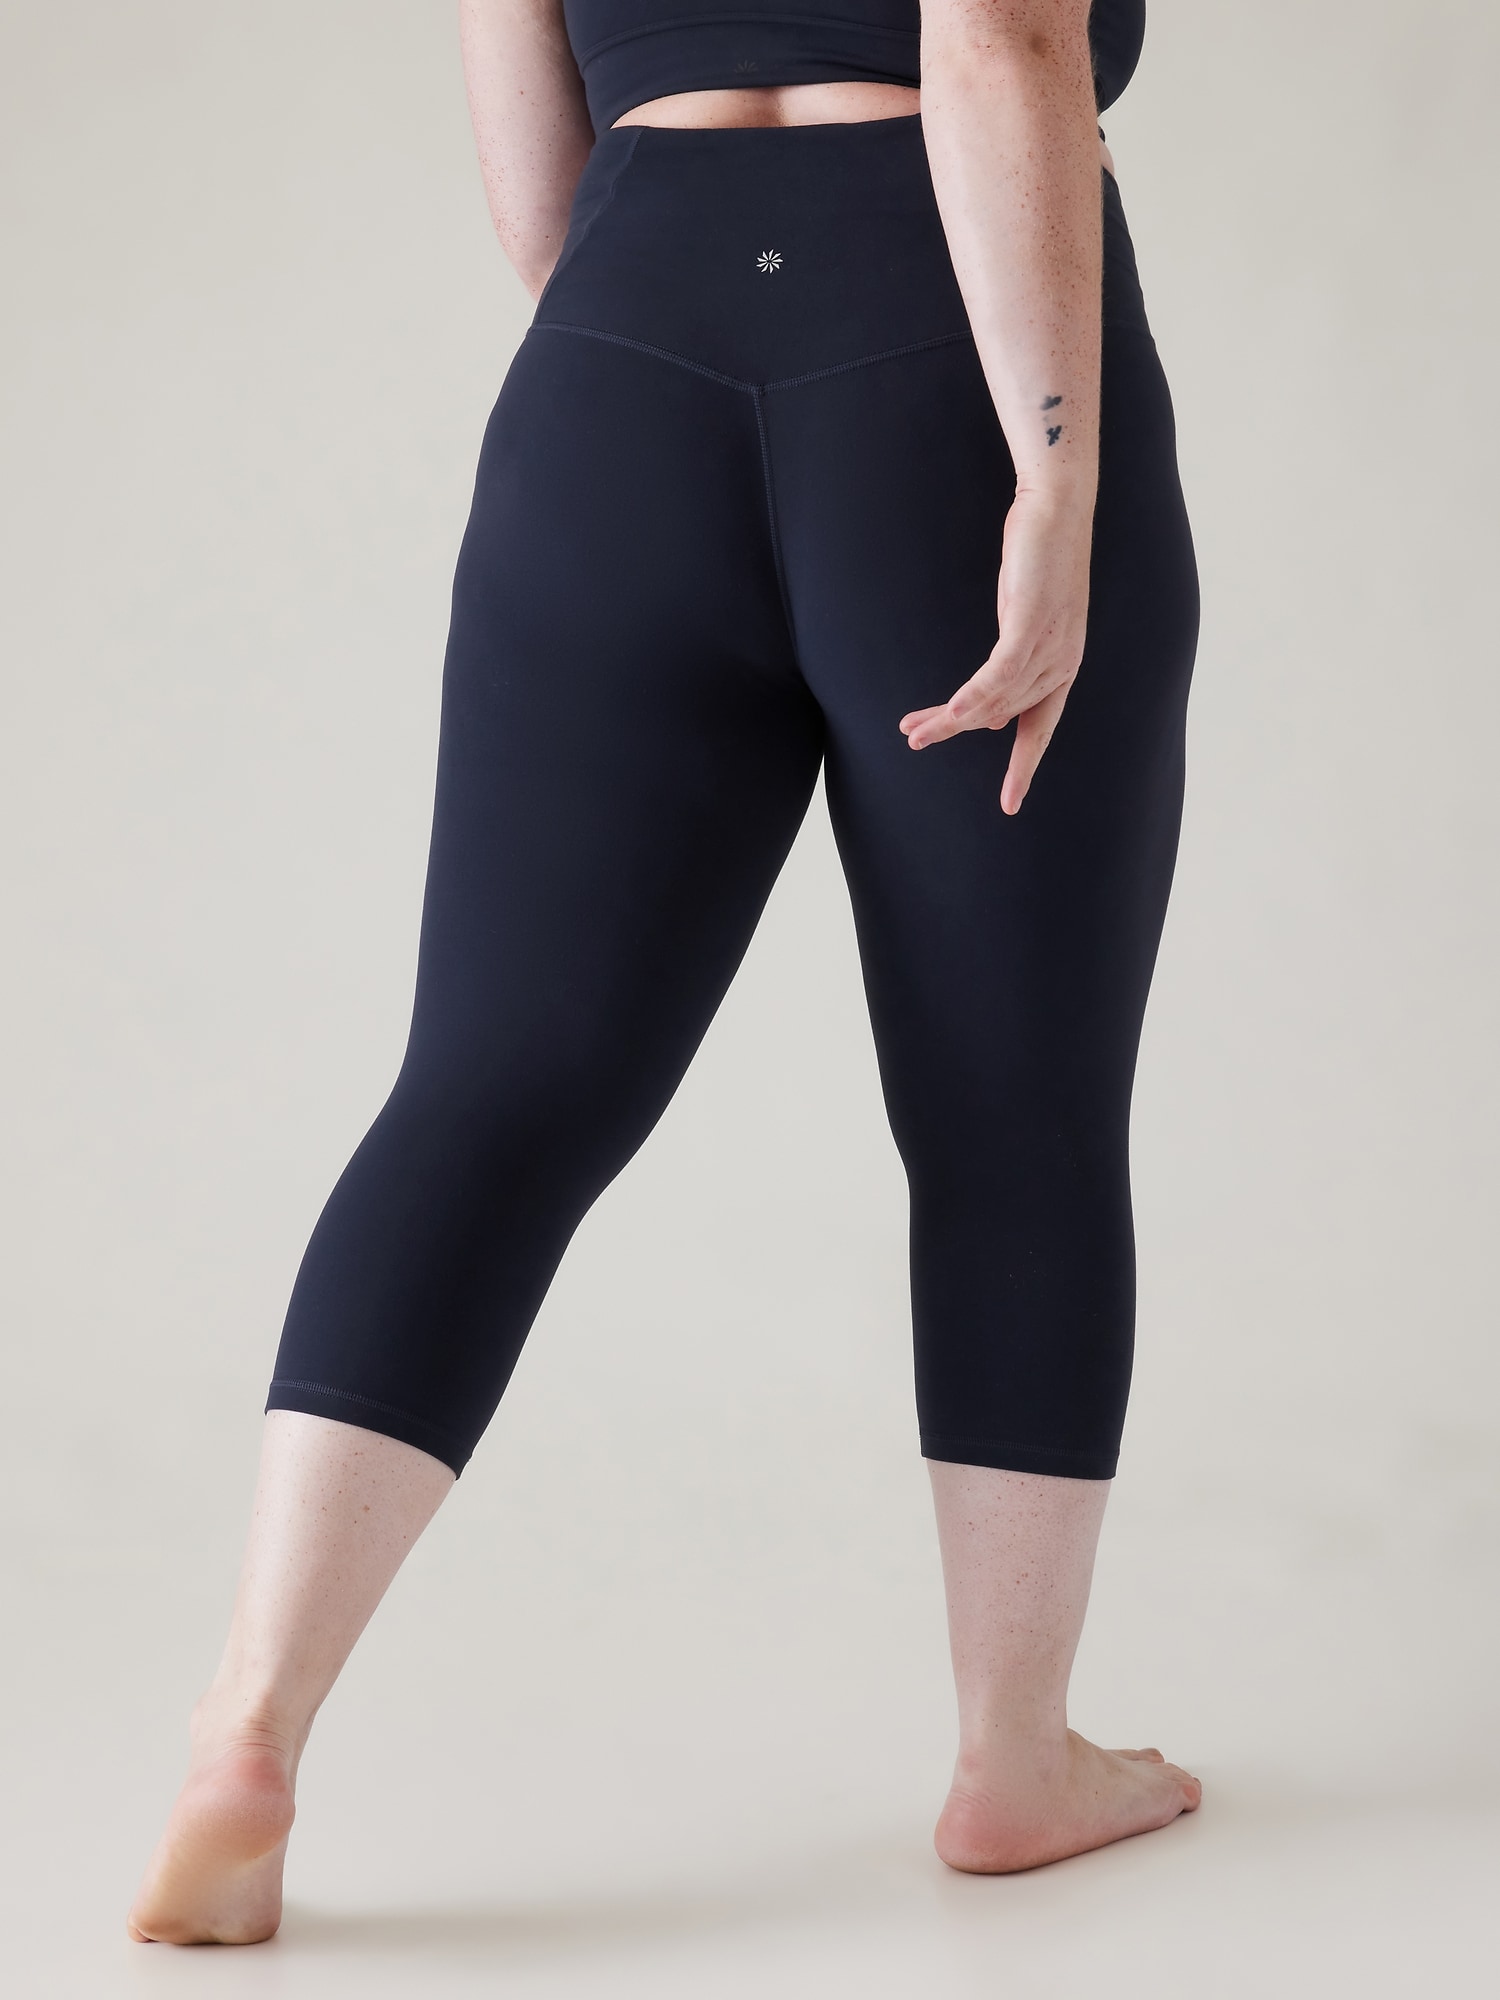 Women's Active Buttery-Soft Capri Workout Leggings. • 5 high rise